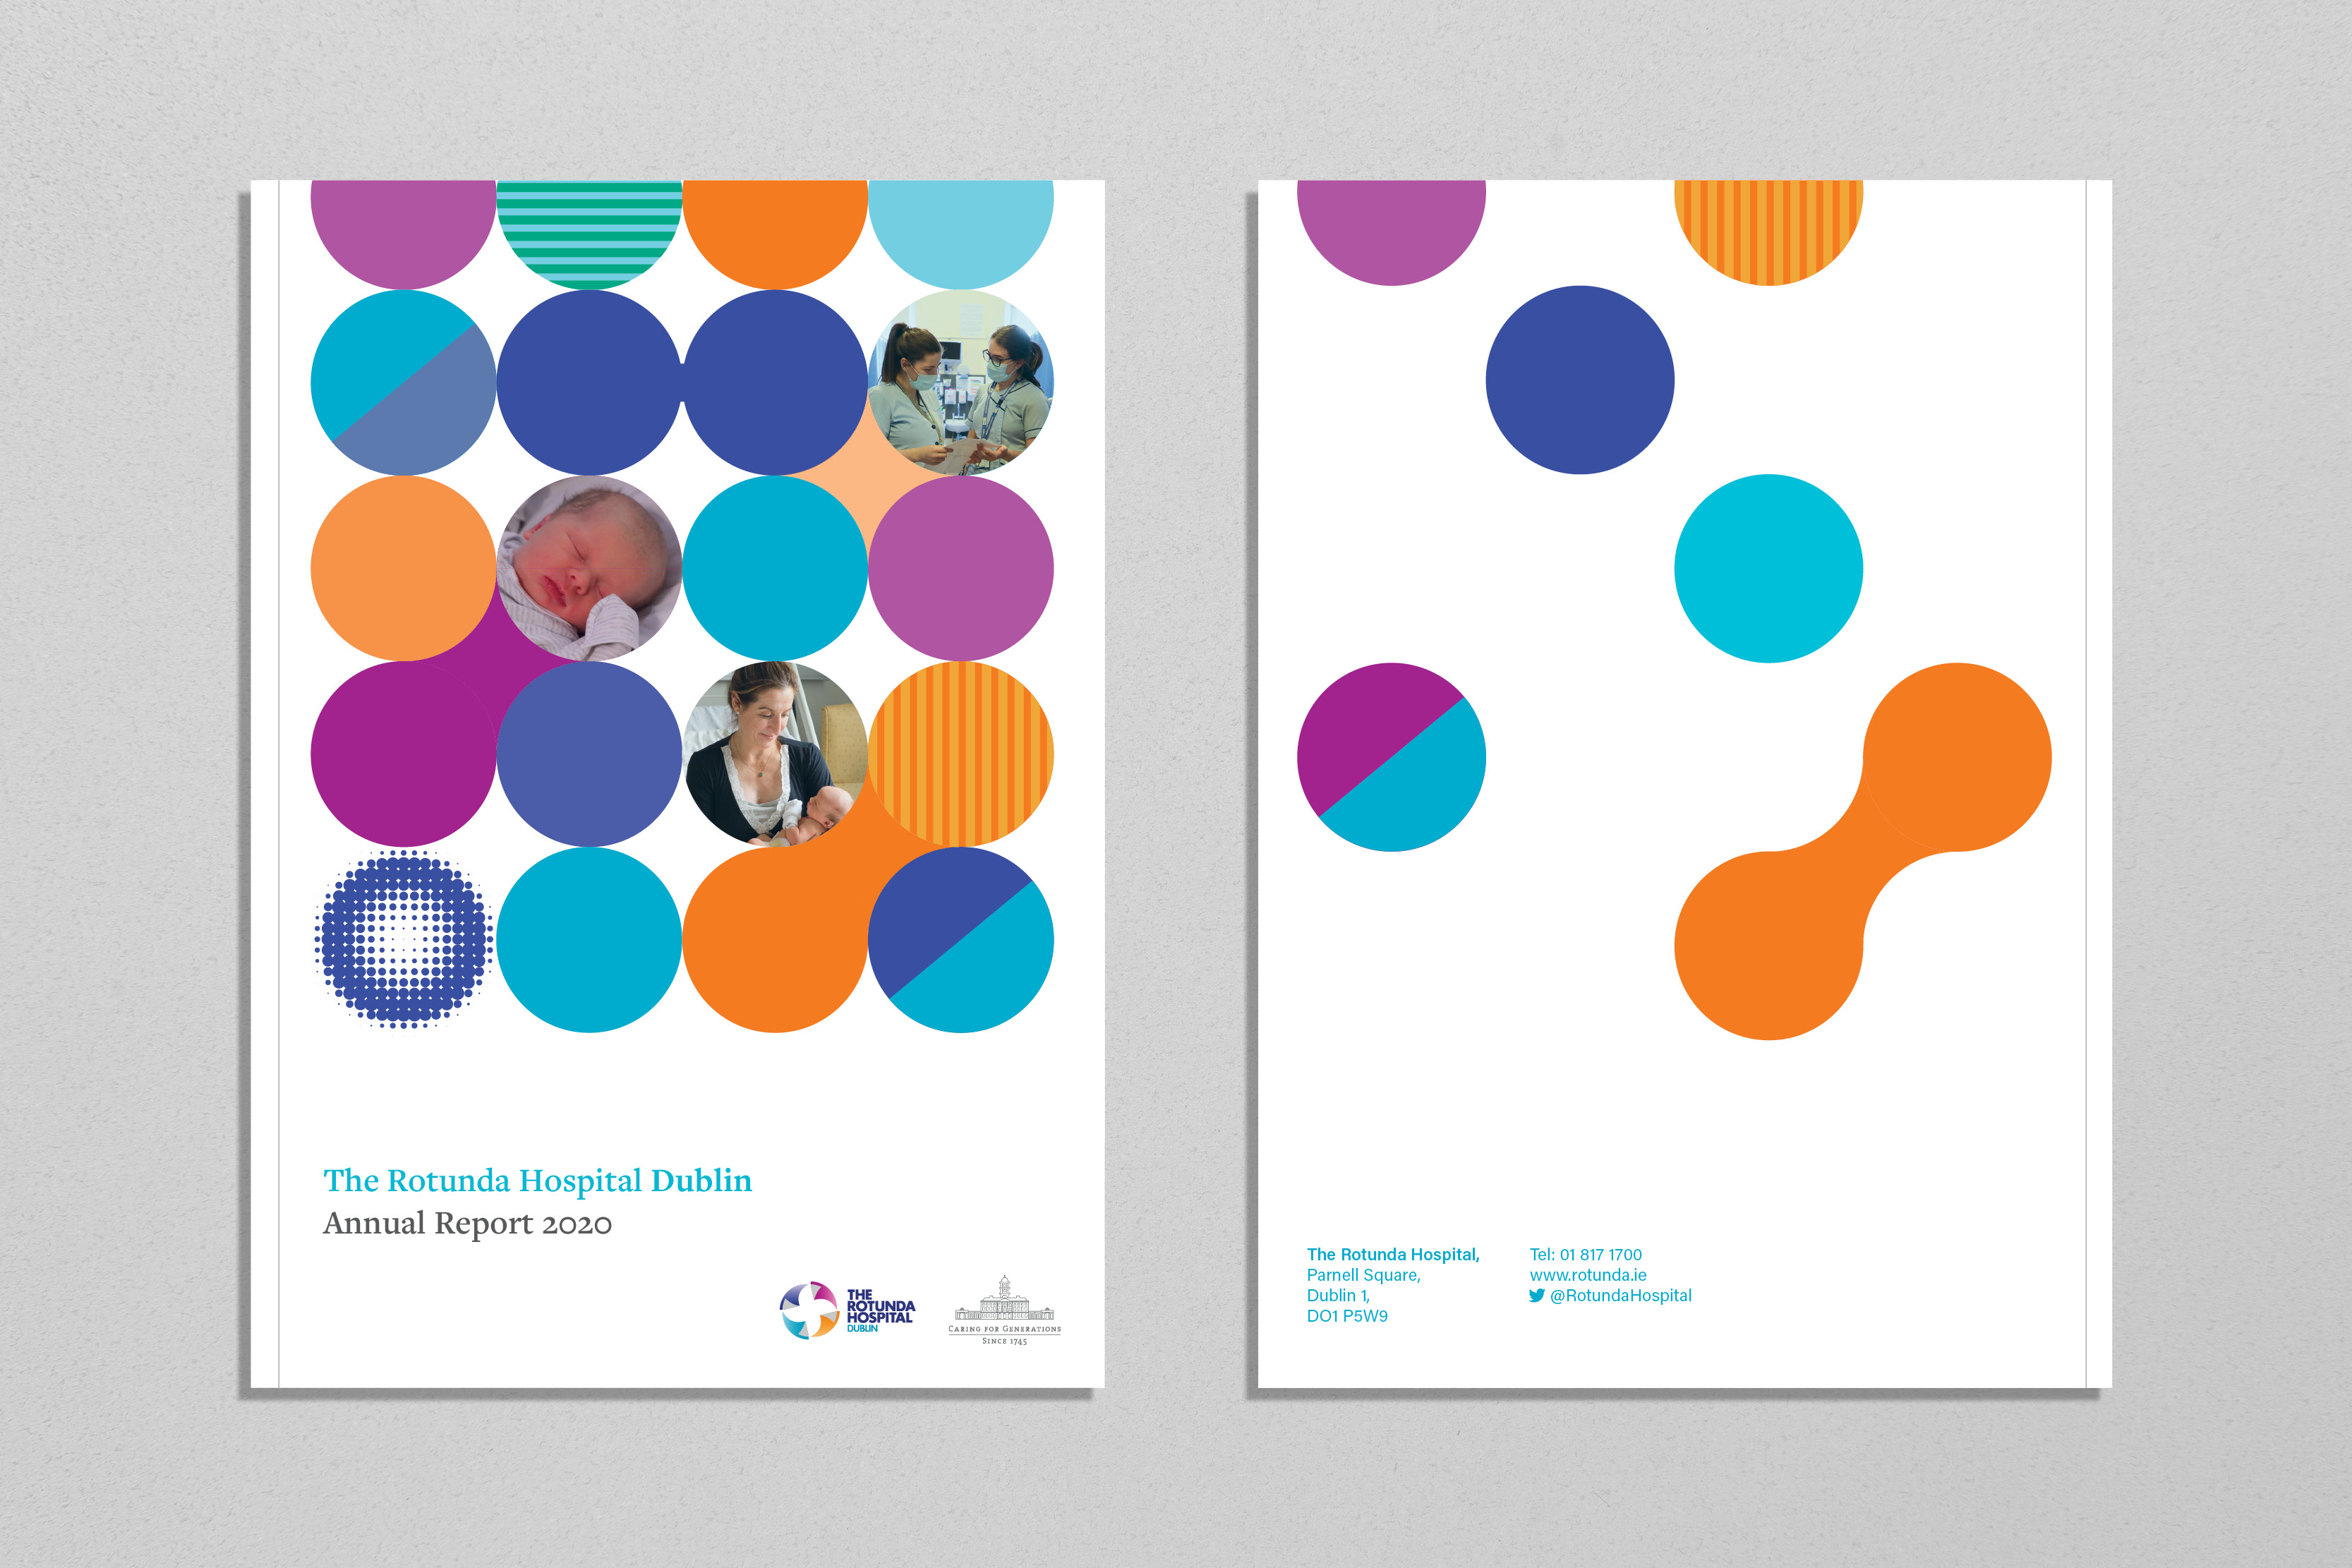 Cover image: The Rotunda Hospital Annual Report 2020